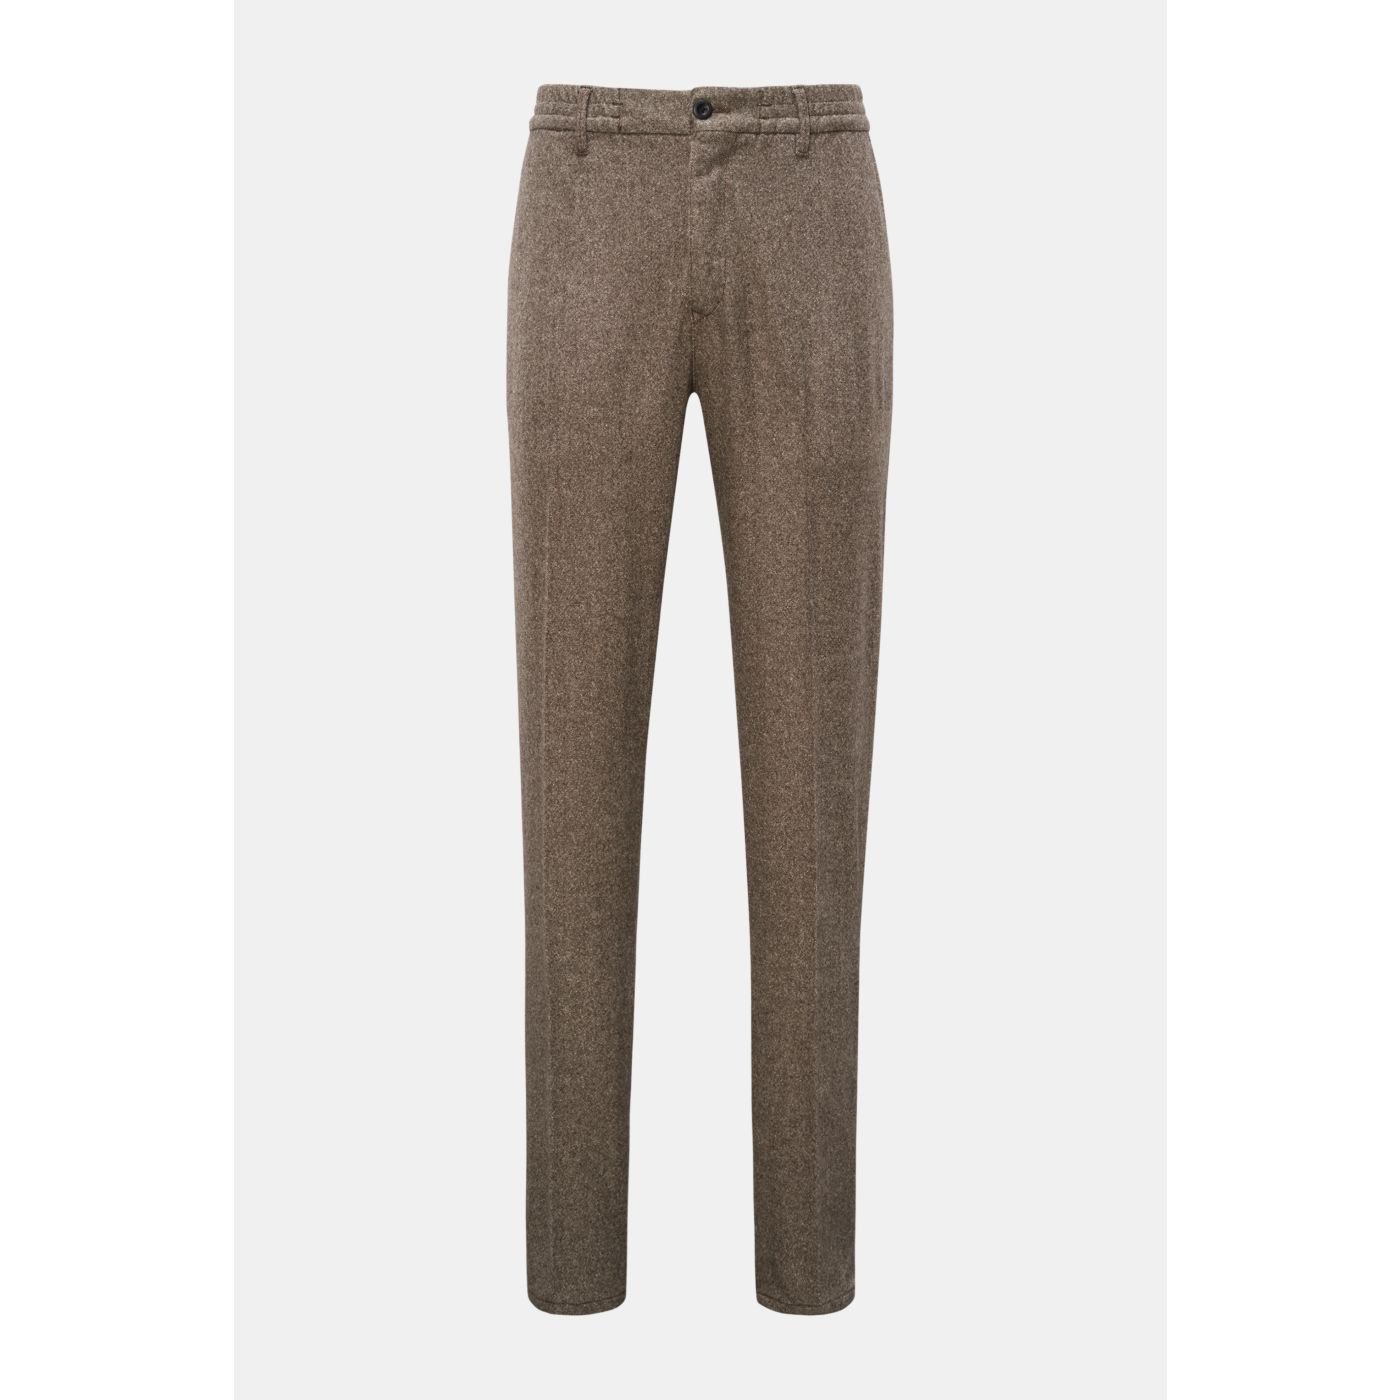 BRAUN INCOTEX SLACKS jogger grey-brown pants | Hamburg flannel